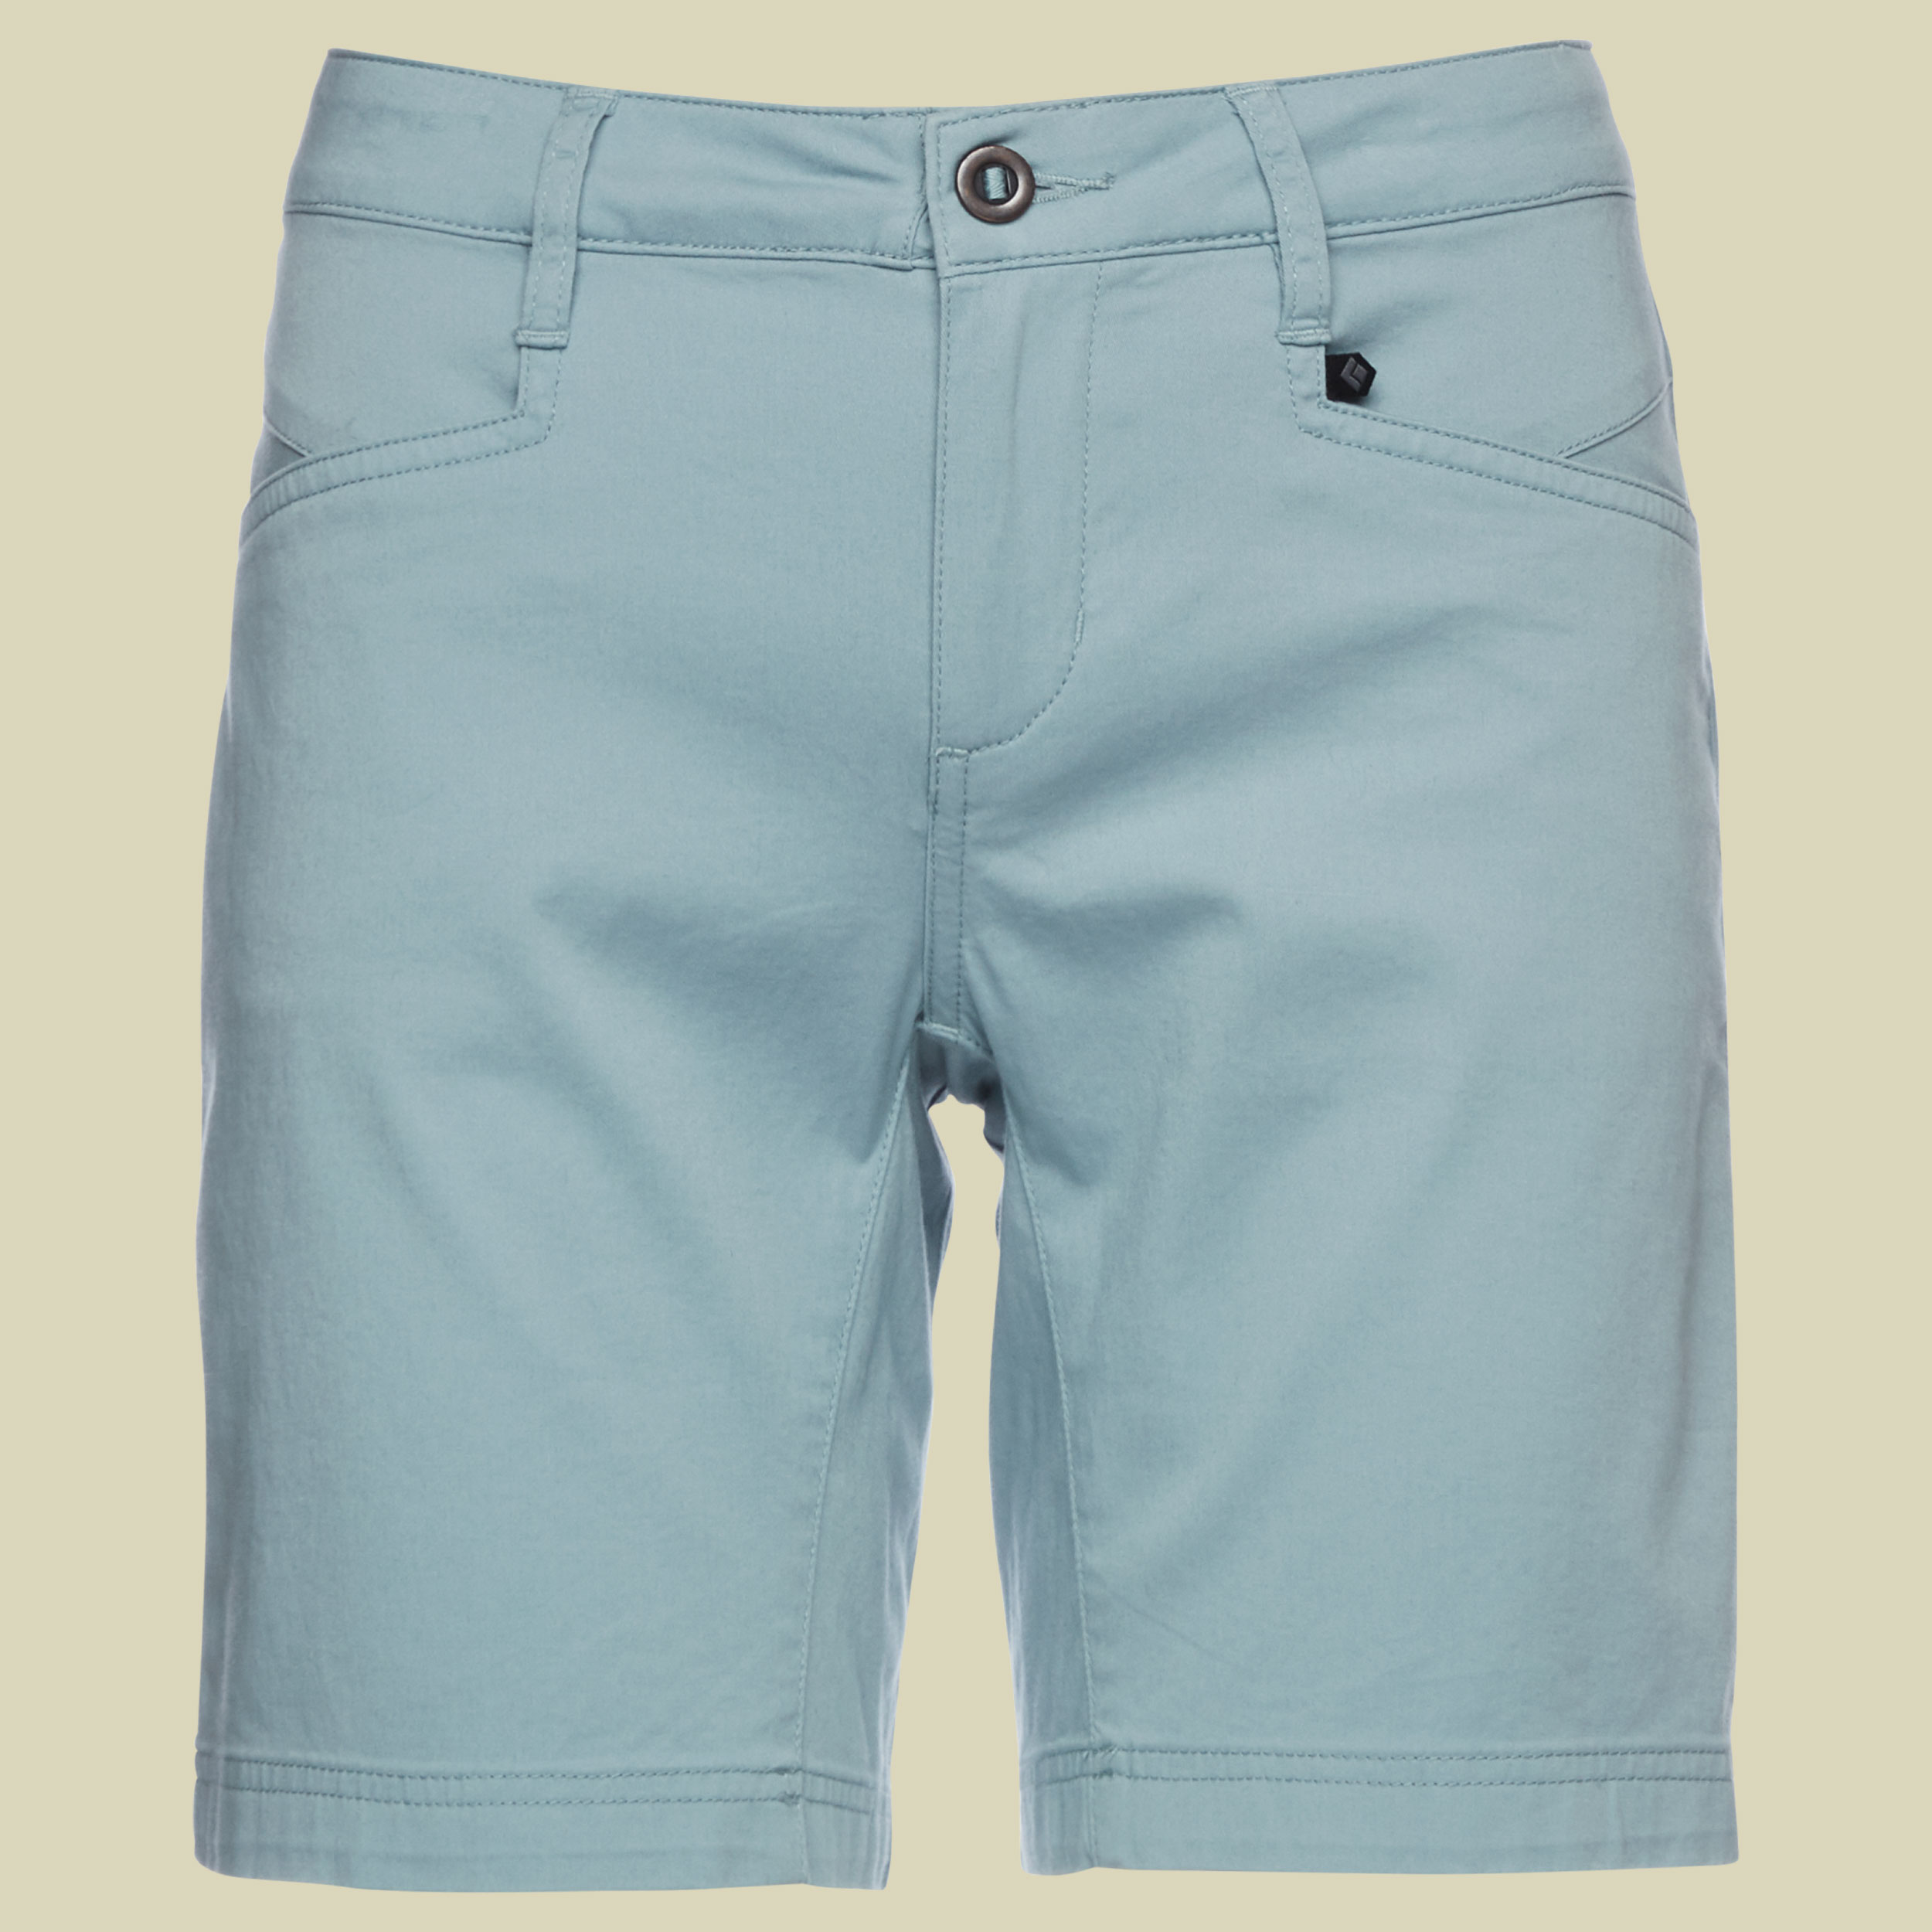 Notion SL Shorts Women Größe L  (10) Farbe blue ash